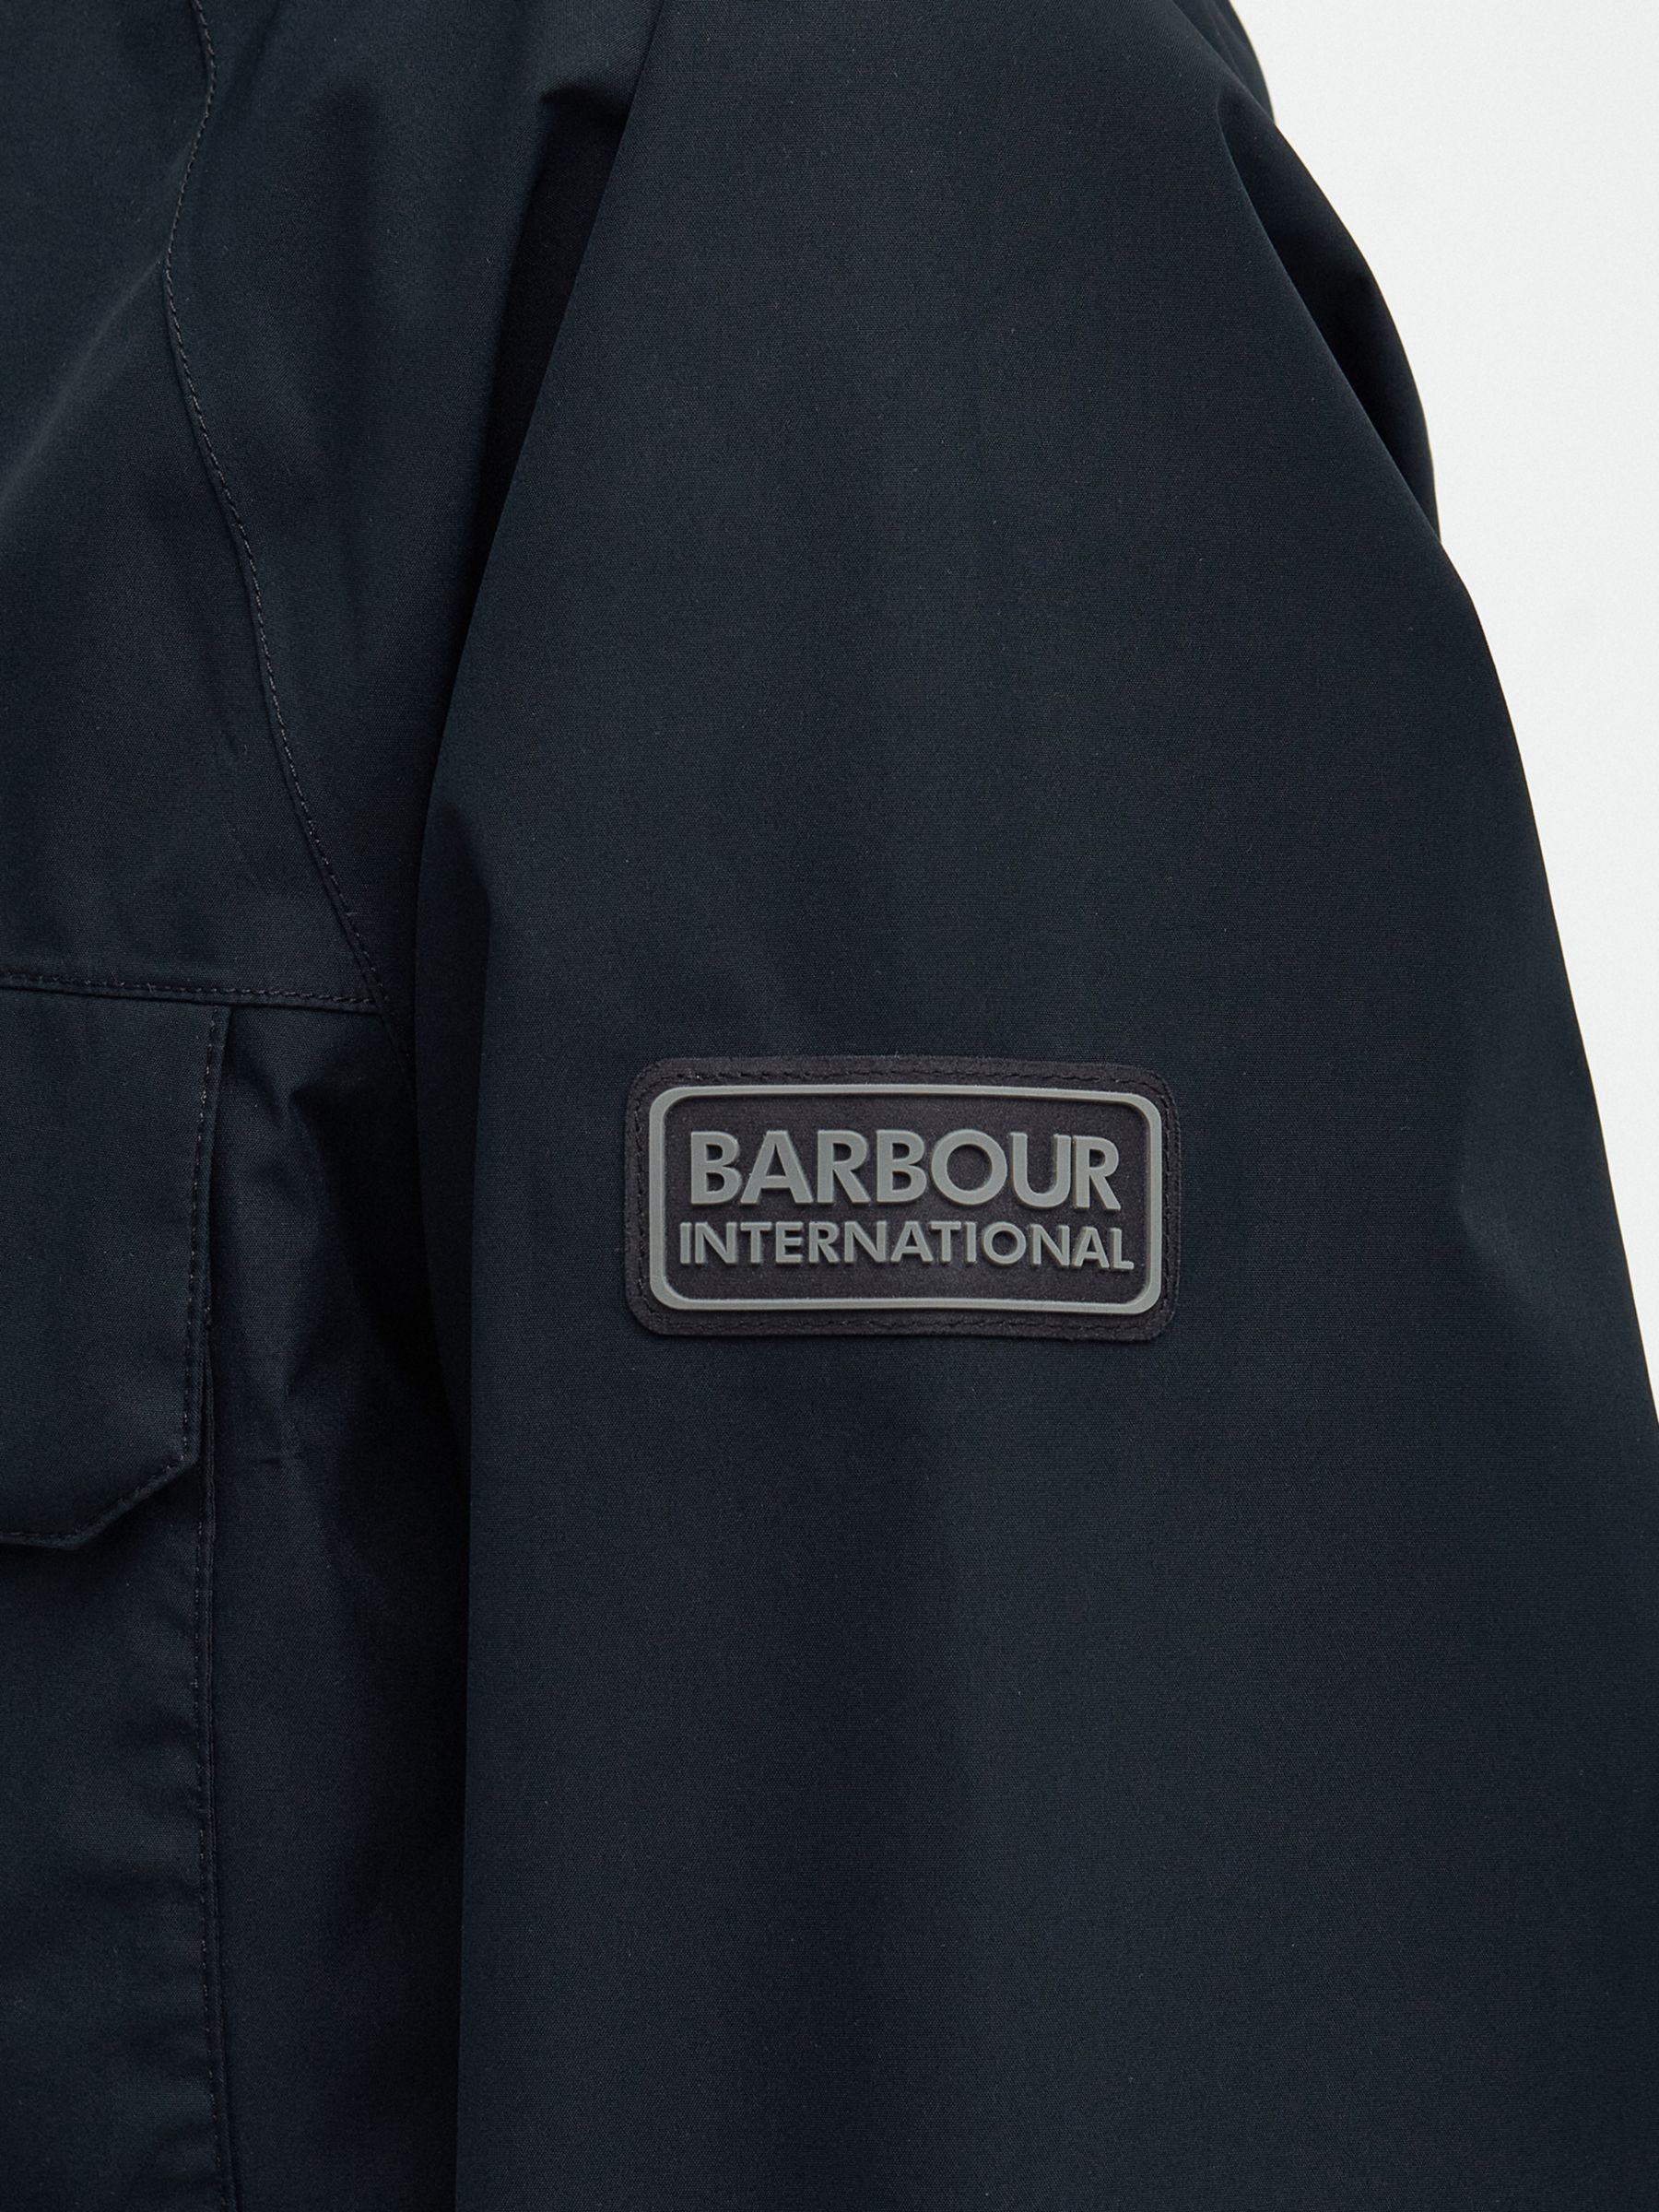 Buy Barbour International Callerton Waterproof Jacket Online at johnlewis.com